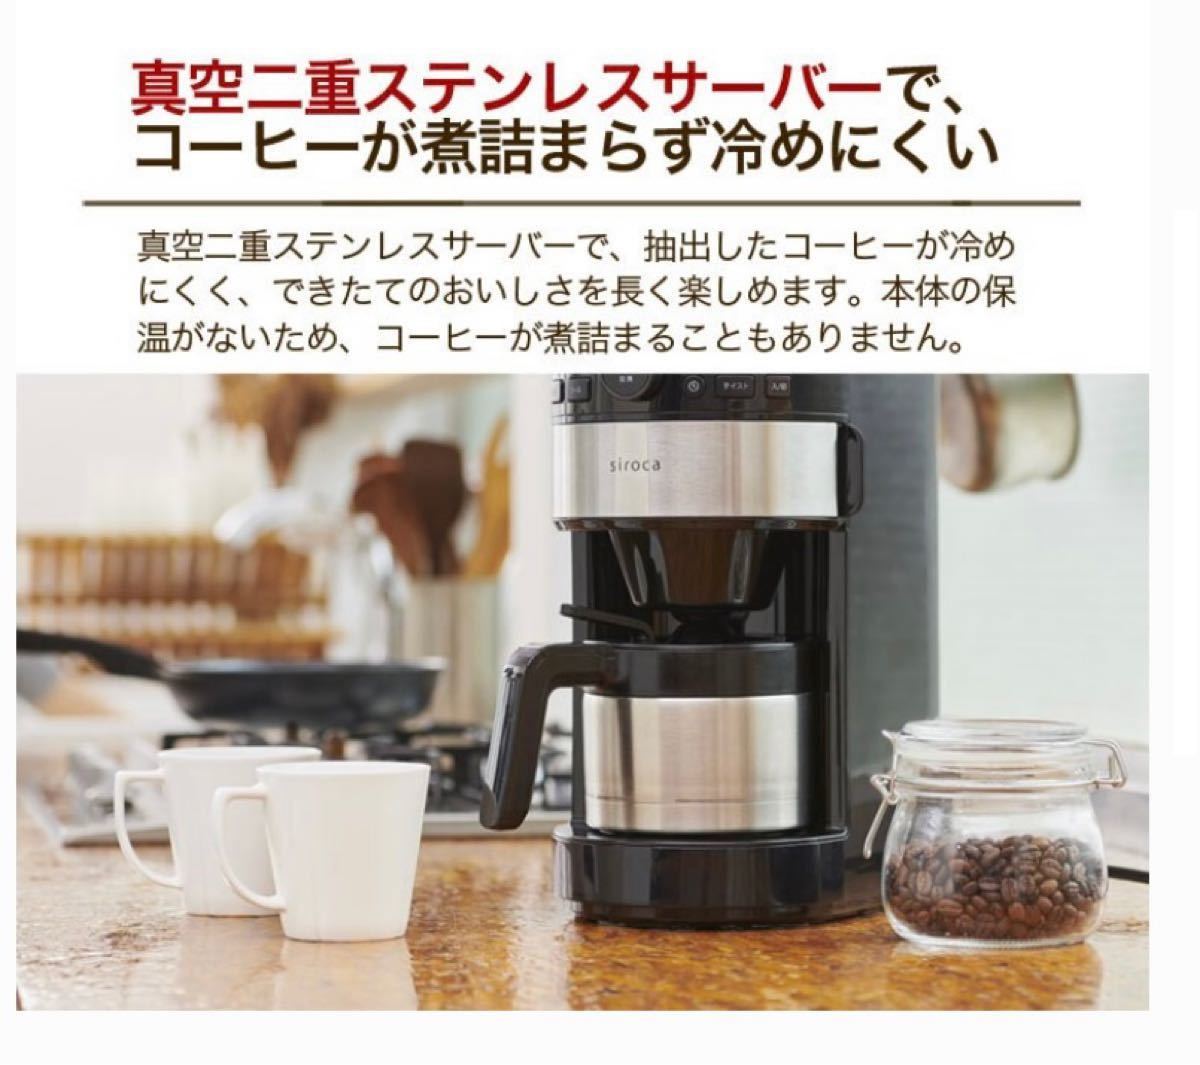 siroca コーン式全自動コーヒーメーカー SC-C122